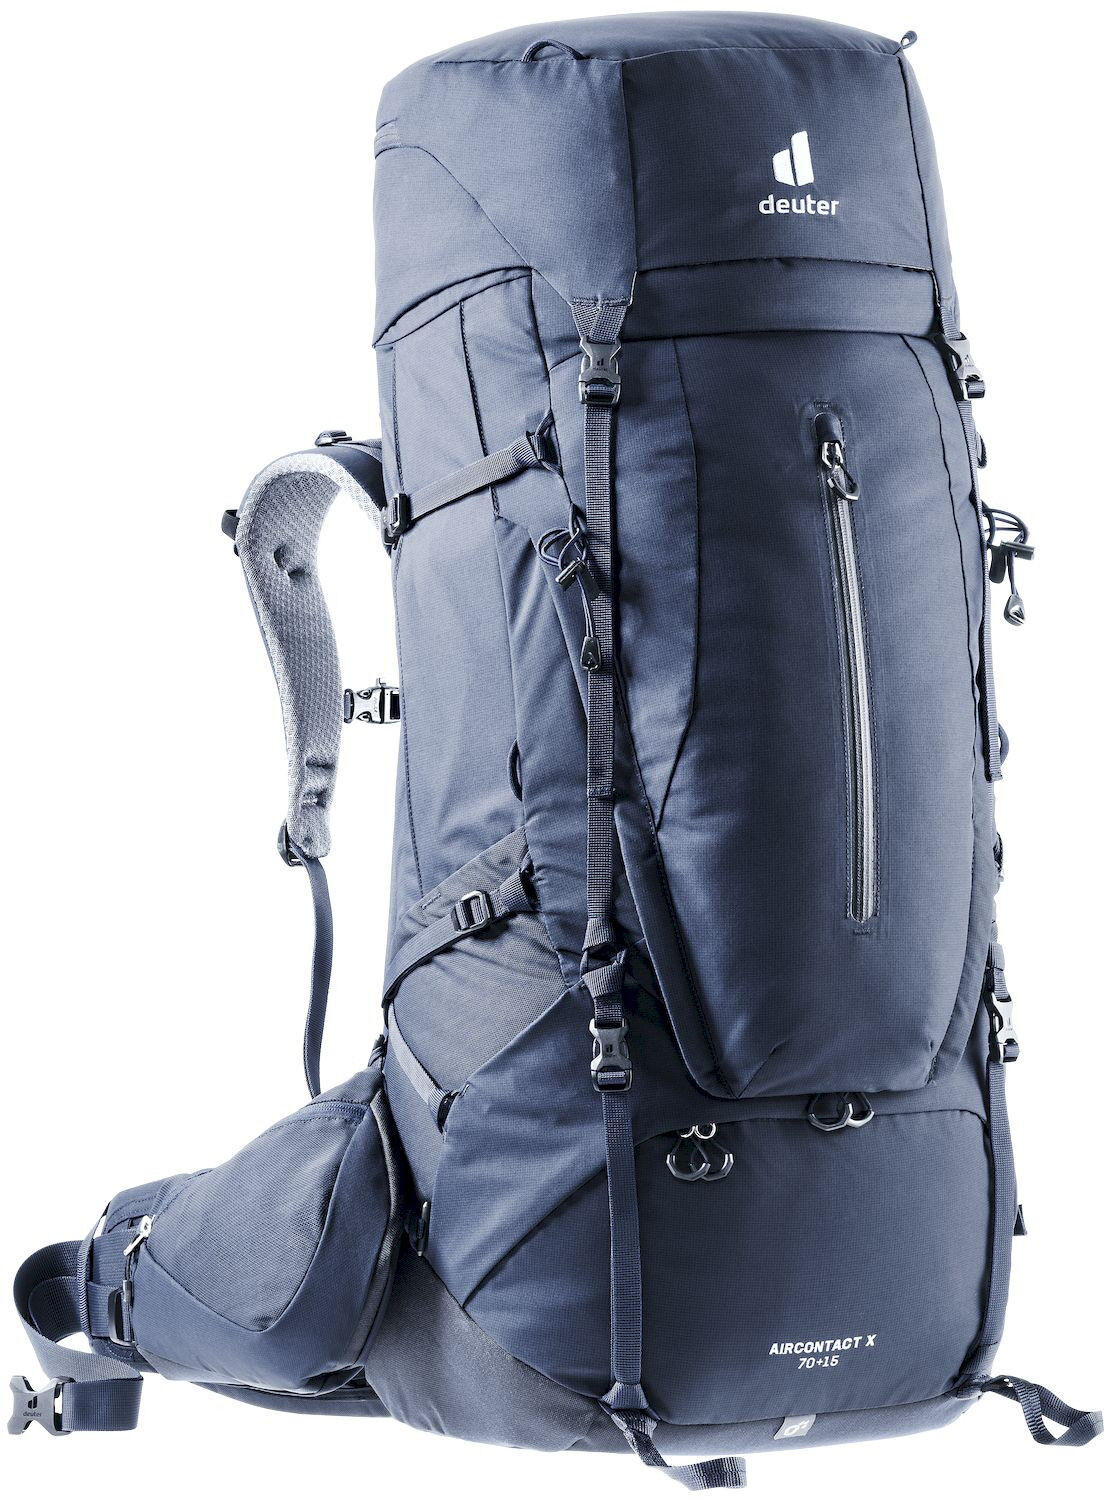 Deuter Aircontact X 70+15 - Hiking backpack - Men's